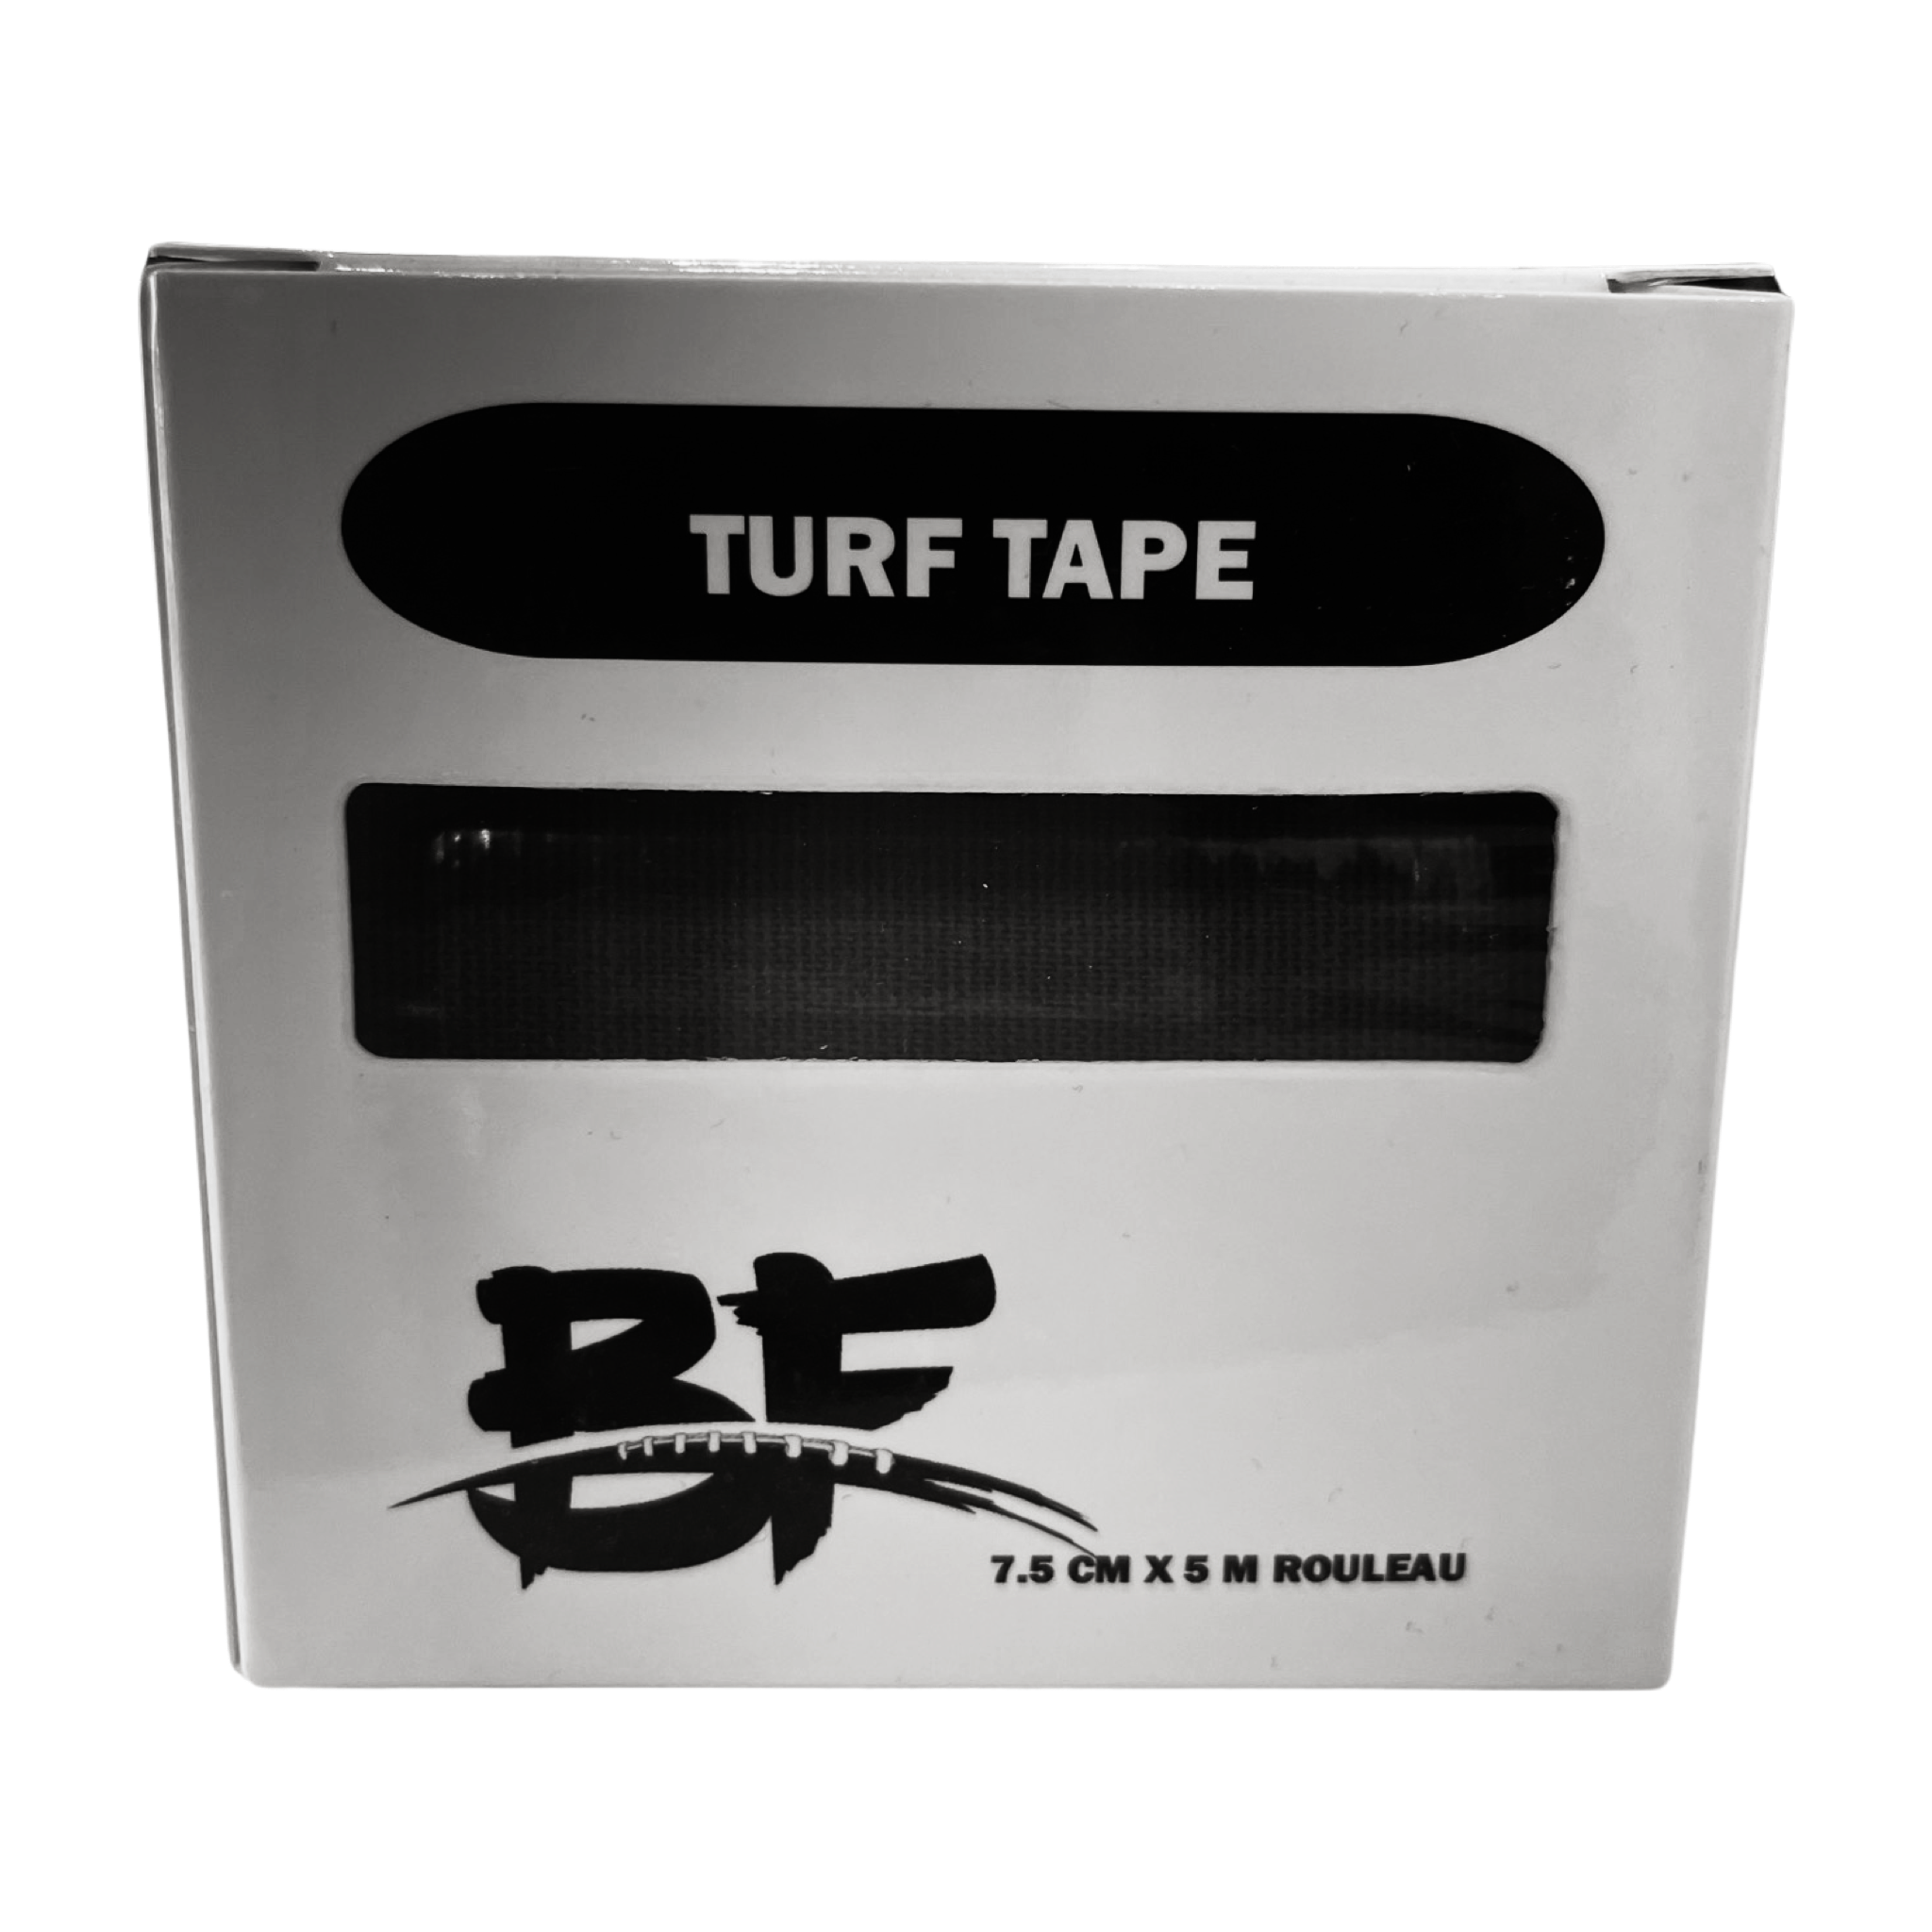 Beastfoot Turf tape - Ruban Protecteur gazon synthétique